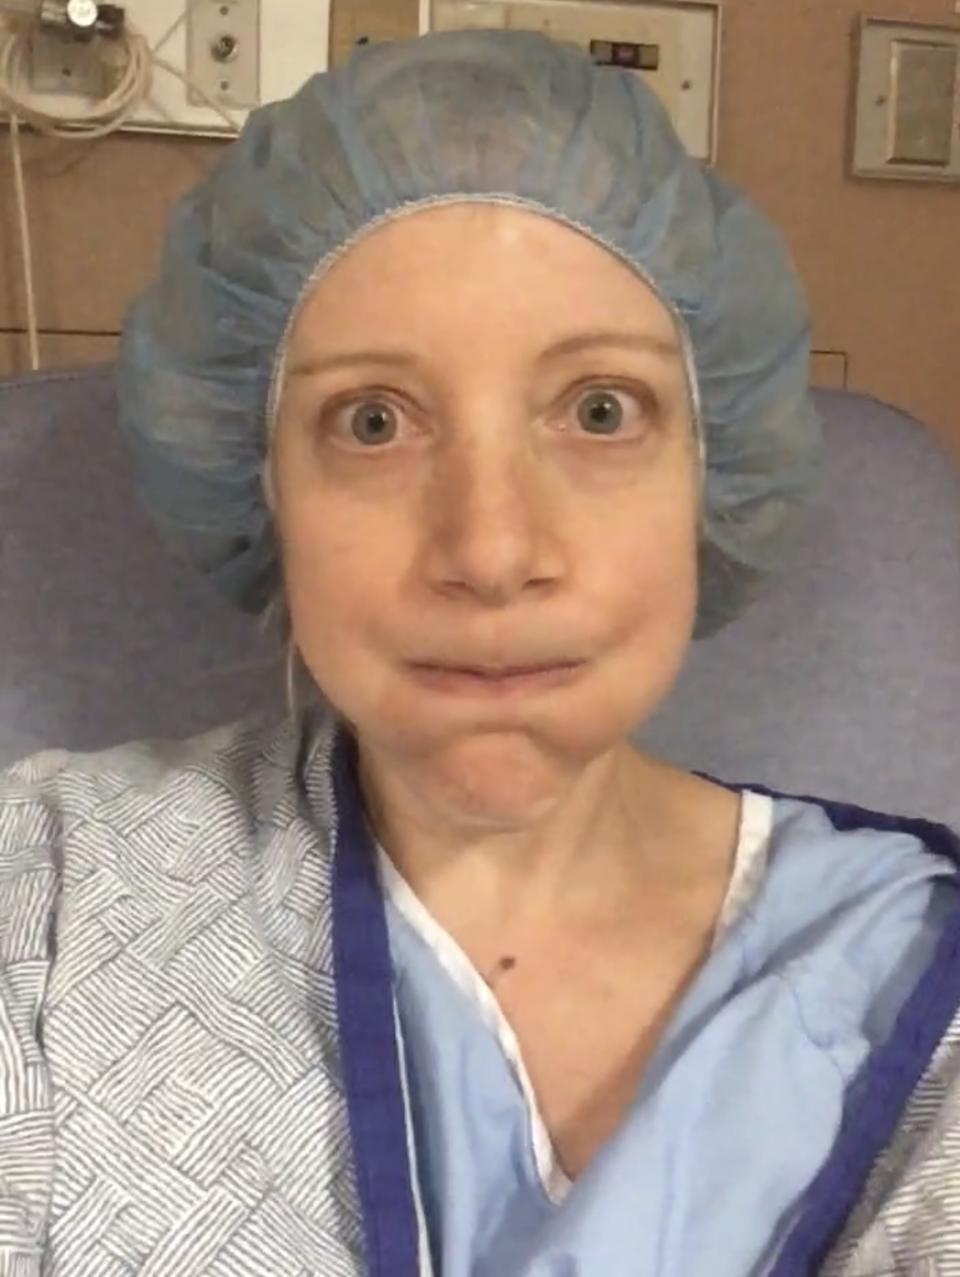 Sarah DiMuro before her double mastectomy. (Image provided by Sarah DiMuro)